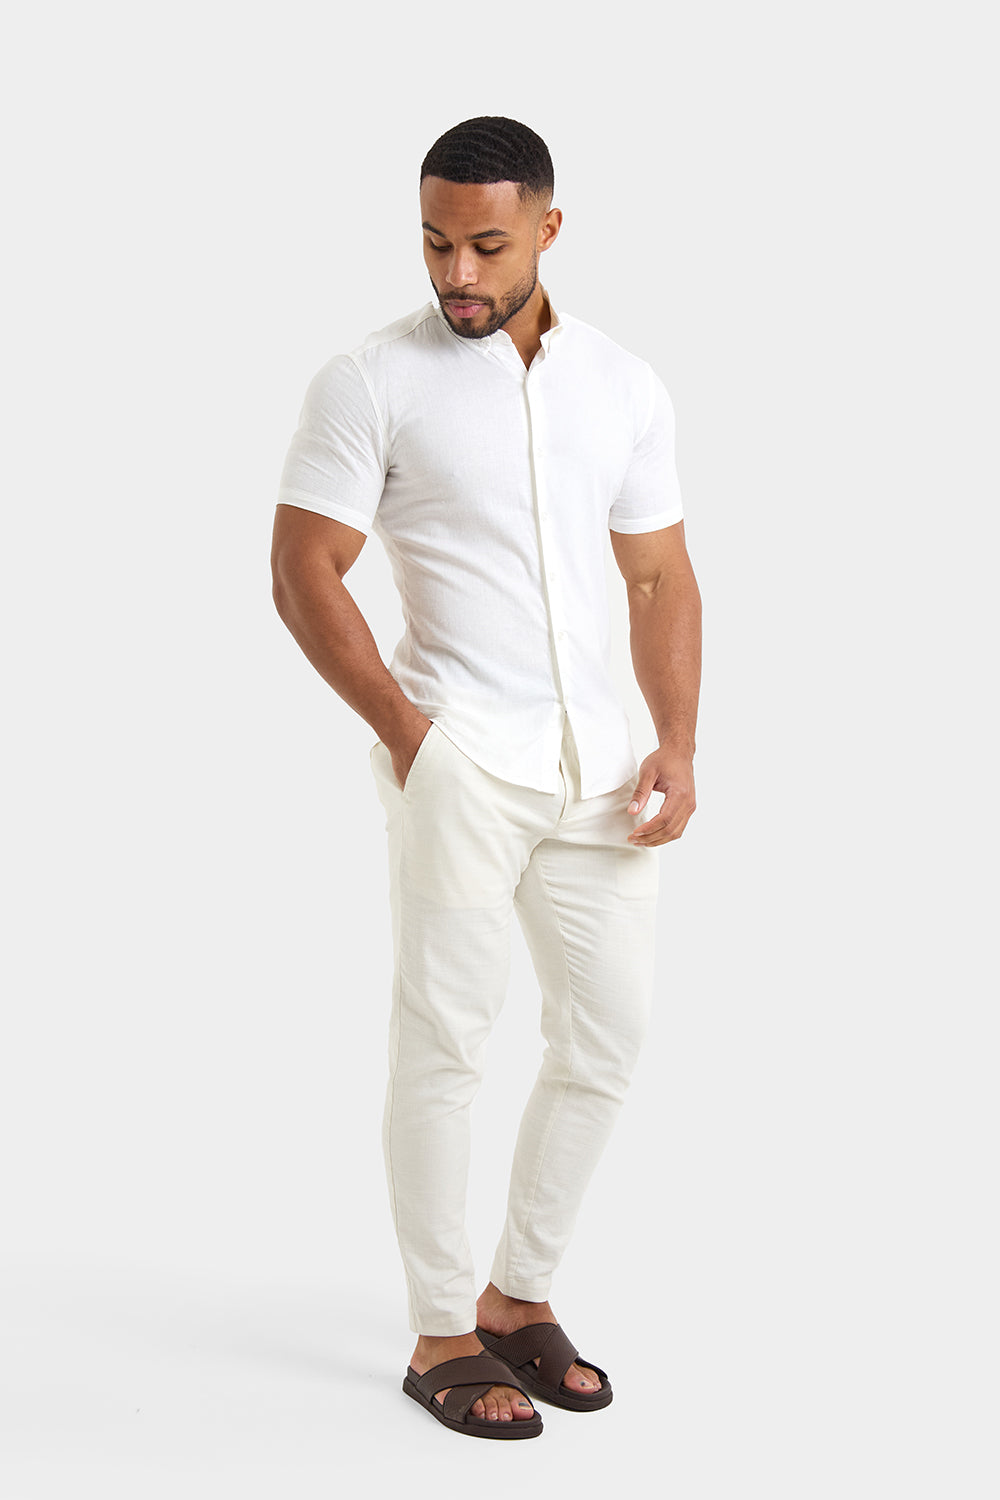 Linen Blend Shirt in White - TAILORED ATHLETE - ROW